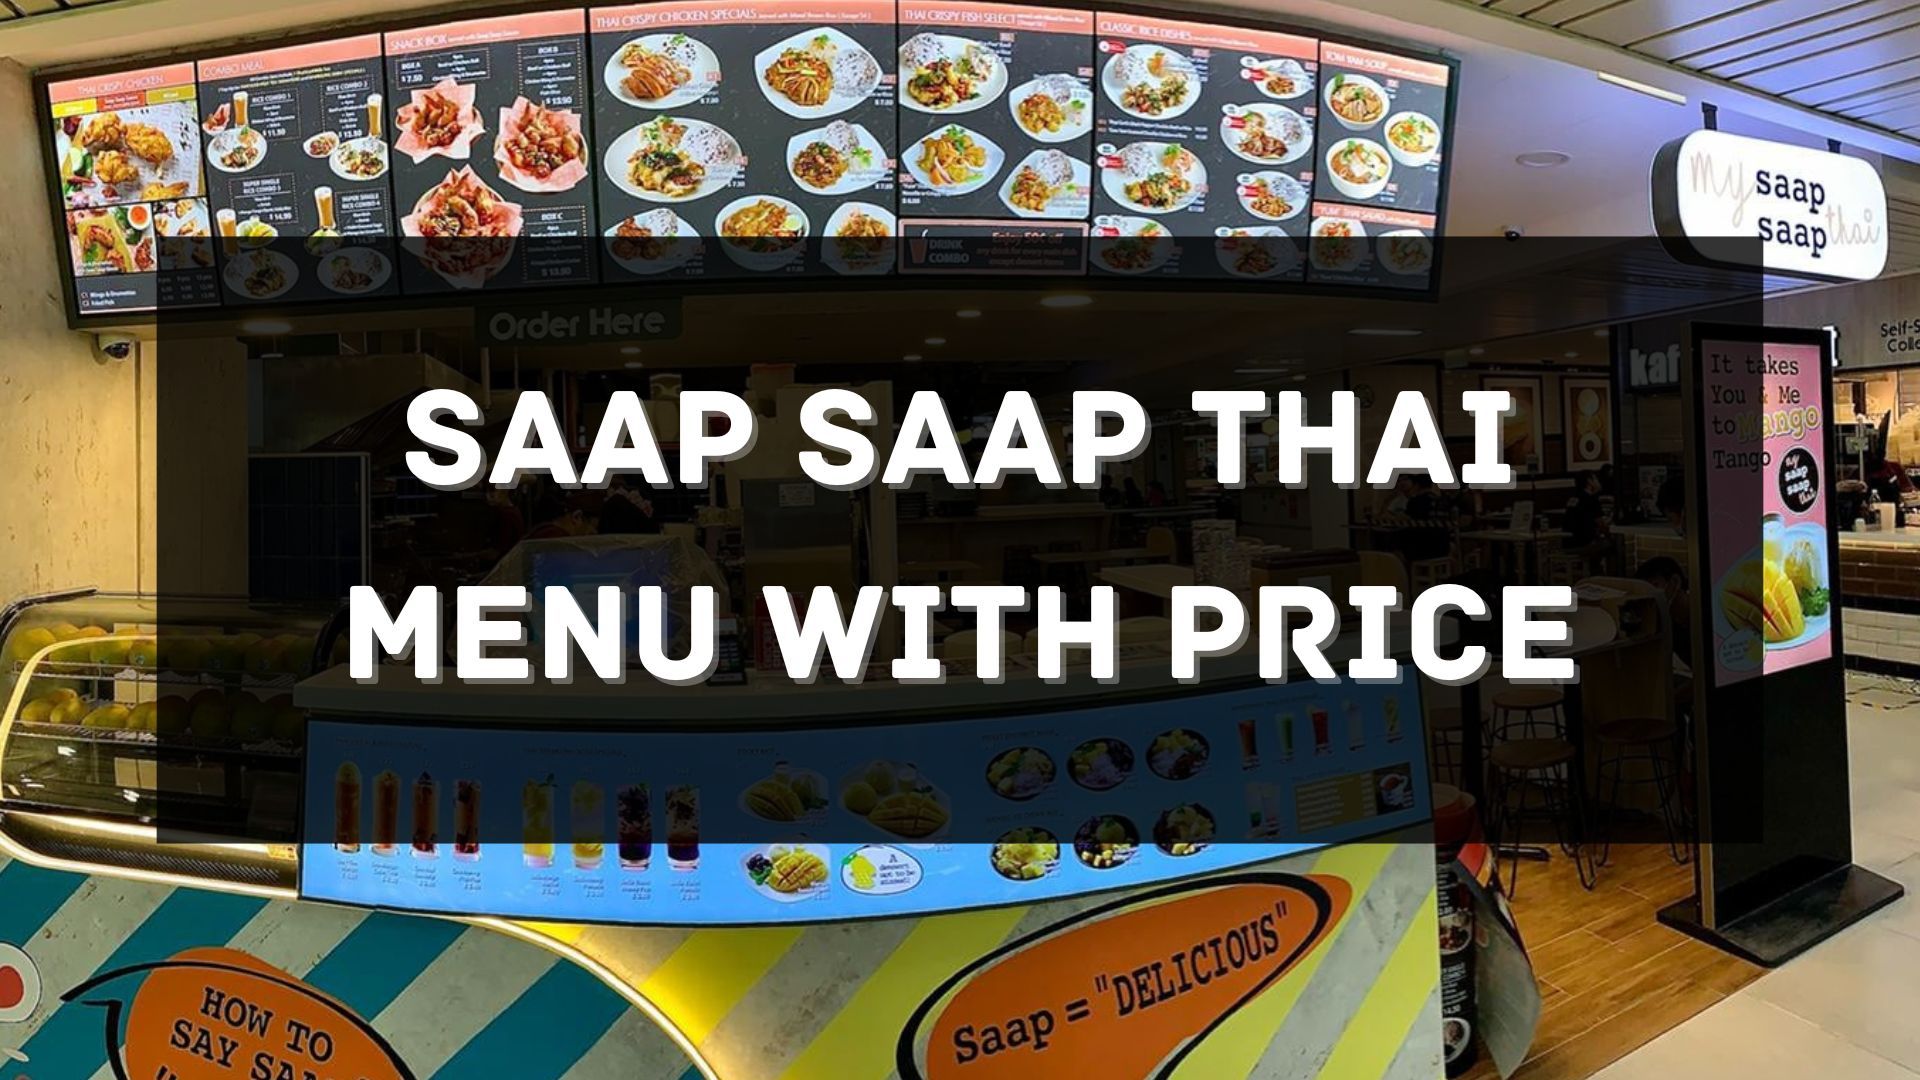 saap saap thai menu with price singapore